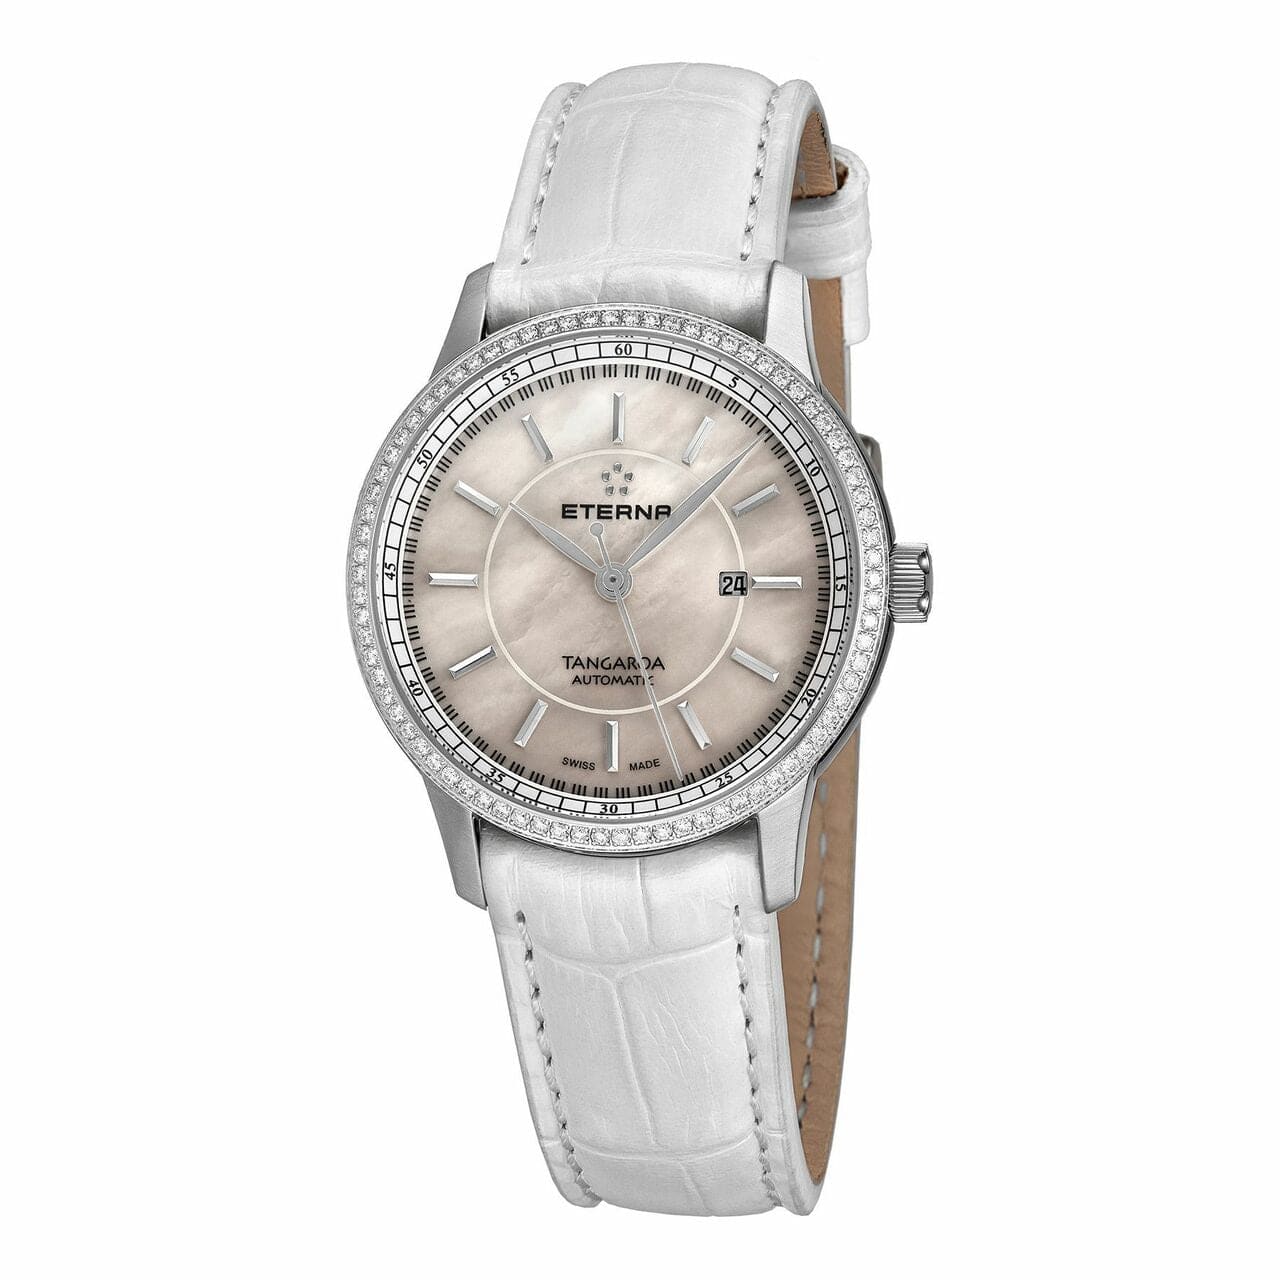 Eterna 2947.50.61.1293 Tangaroa Mother of Pearl Dial Diamond Bezel Women's Automatic Leather Watch 7640157162157